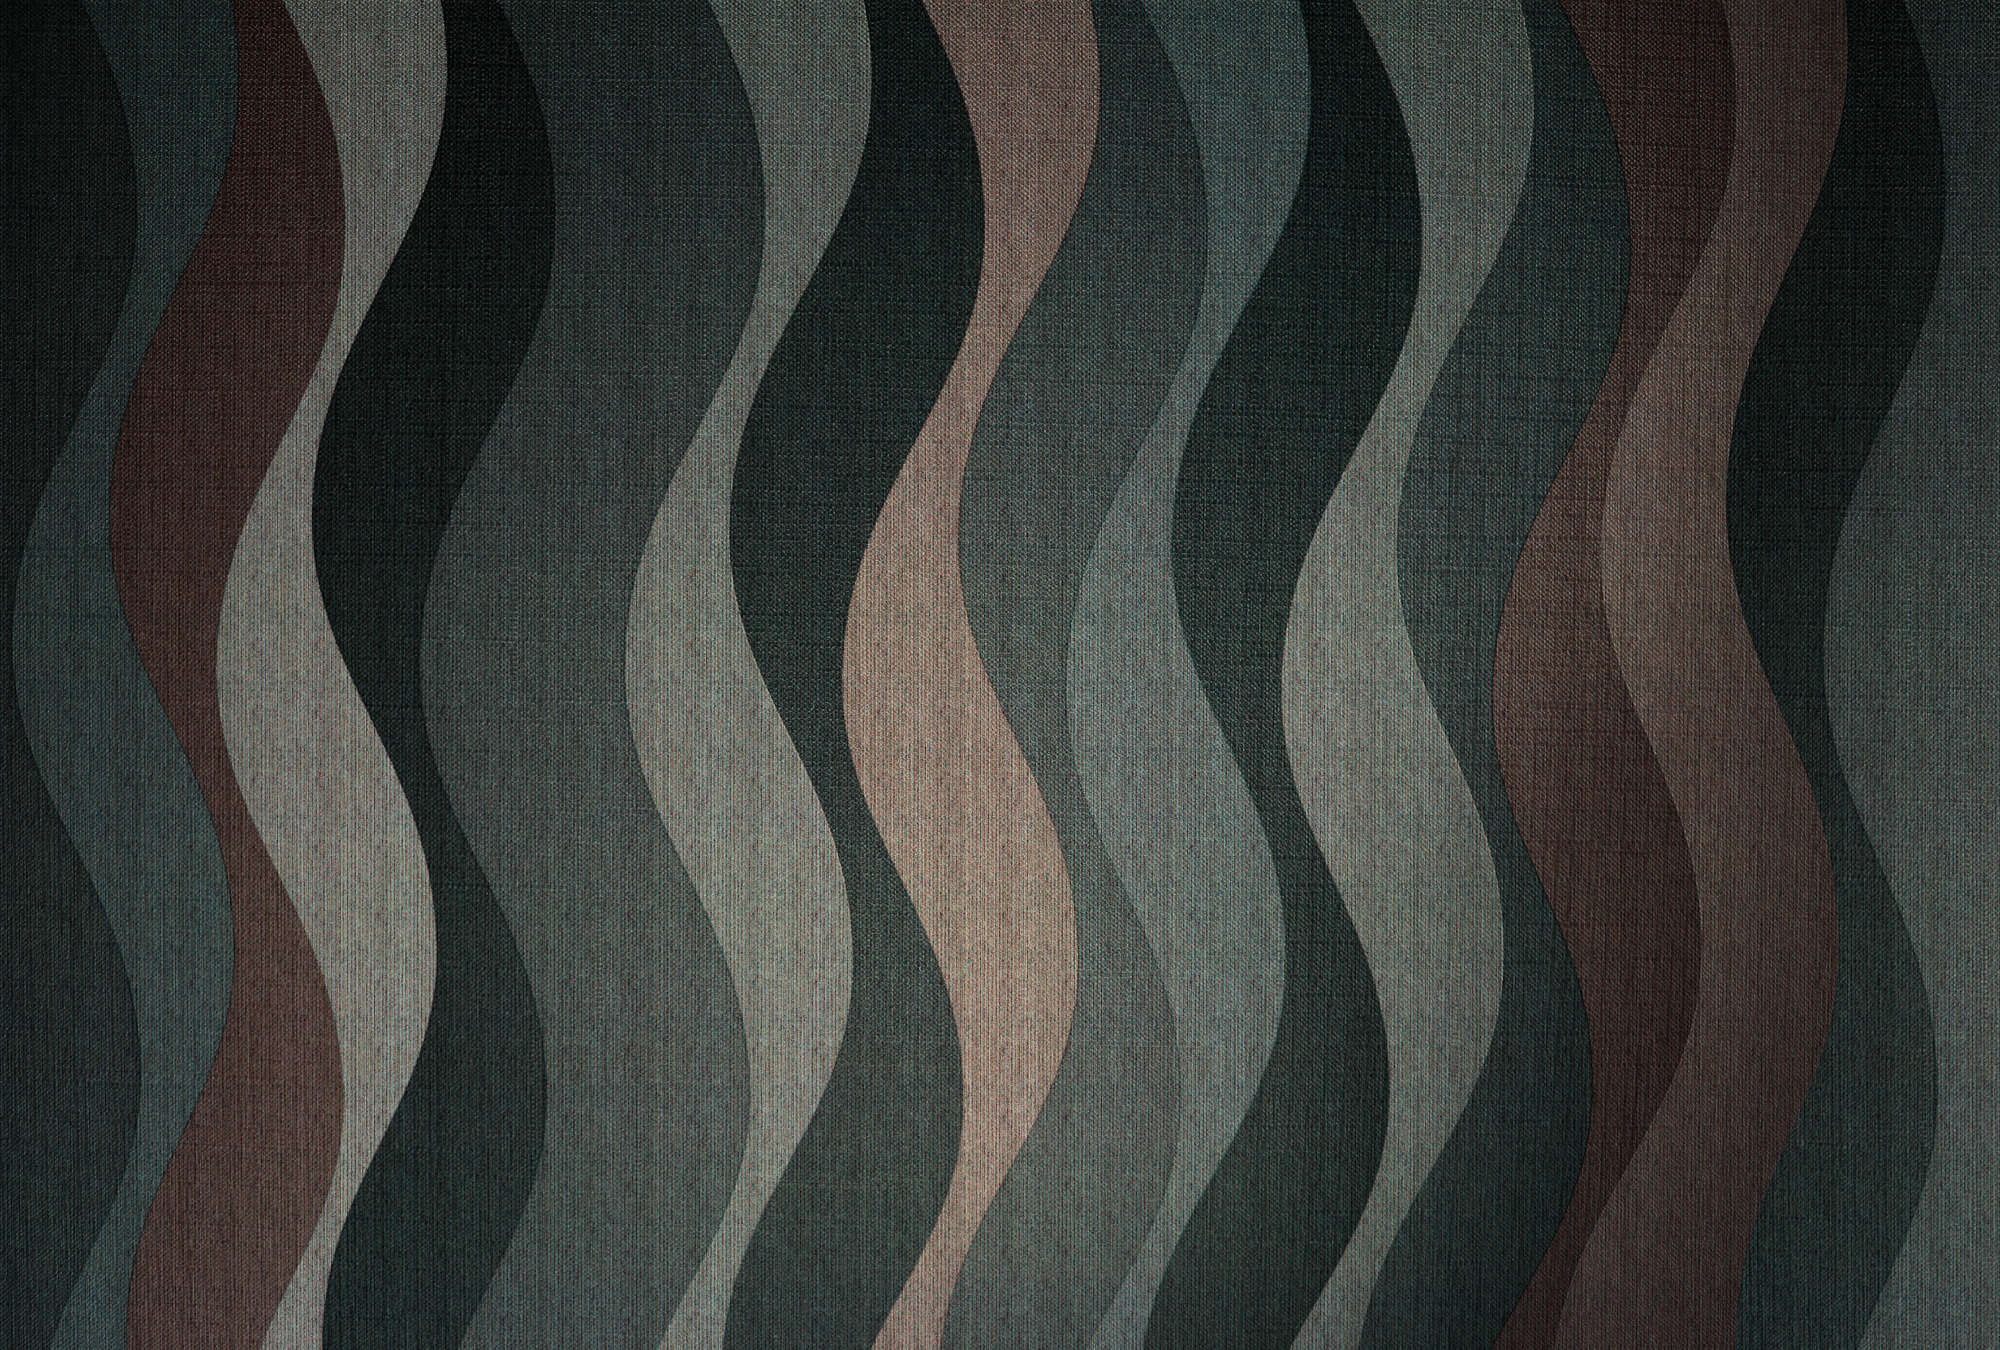             Savoy 1 – Dunkle Fototapete Retro Grafik Wellen Muster
        